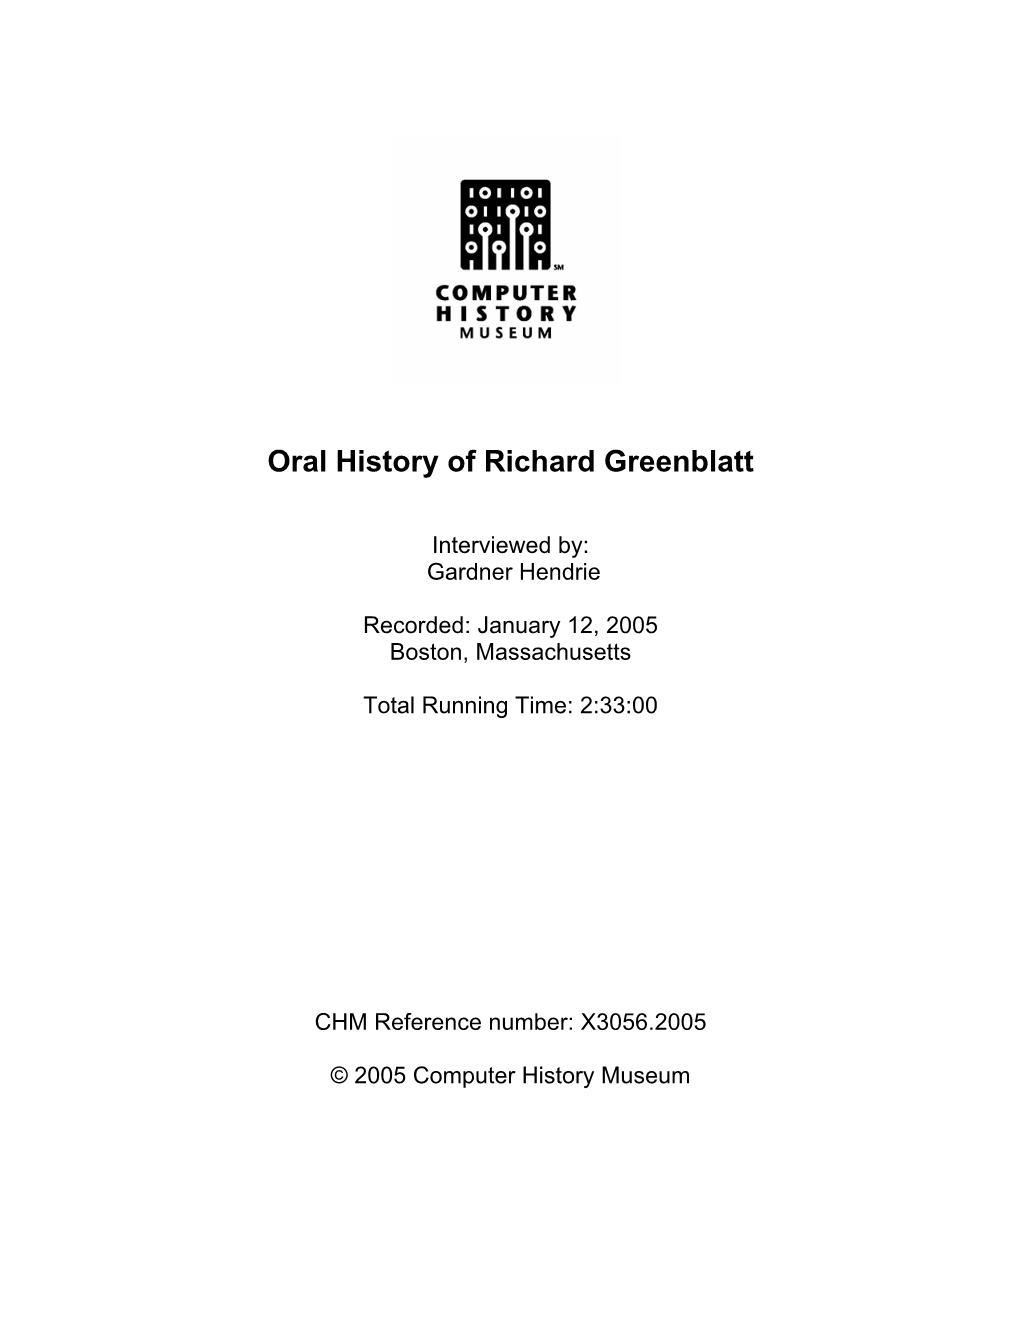 Oral History of Richard Greenblatt; 2005-01-12